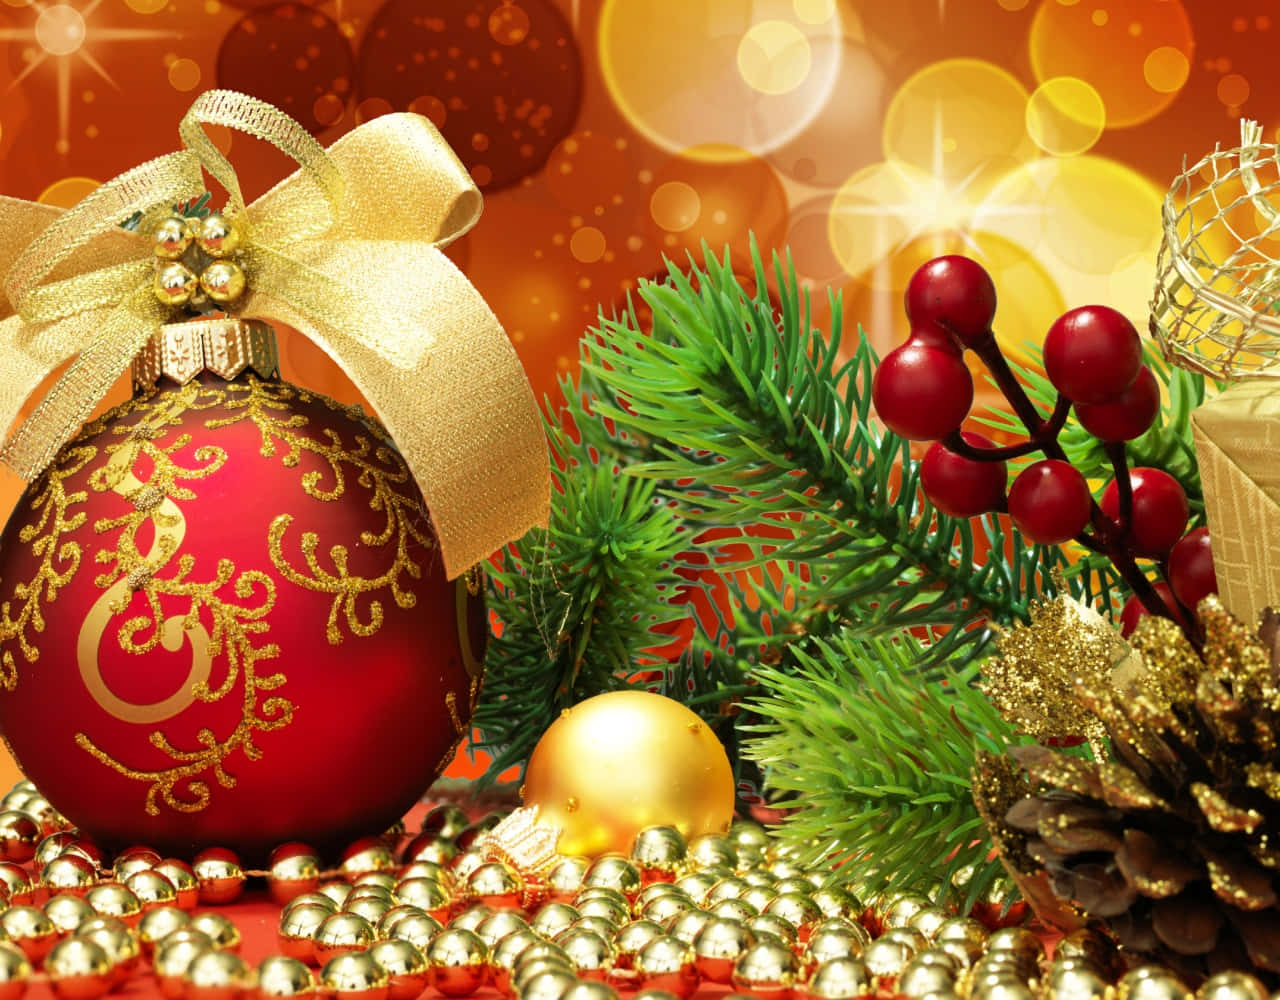 Celebrate the season of joy with Merry Christmas!